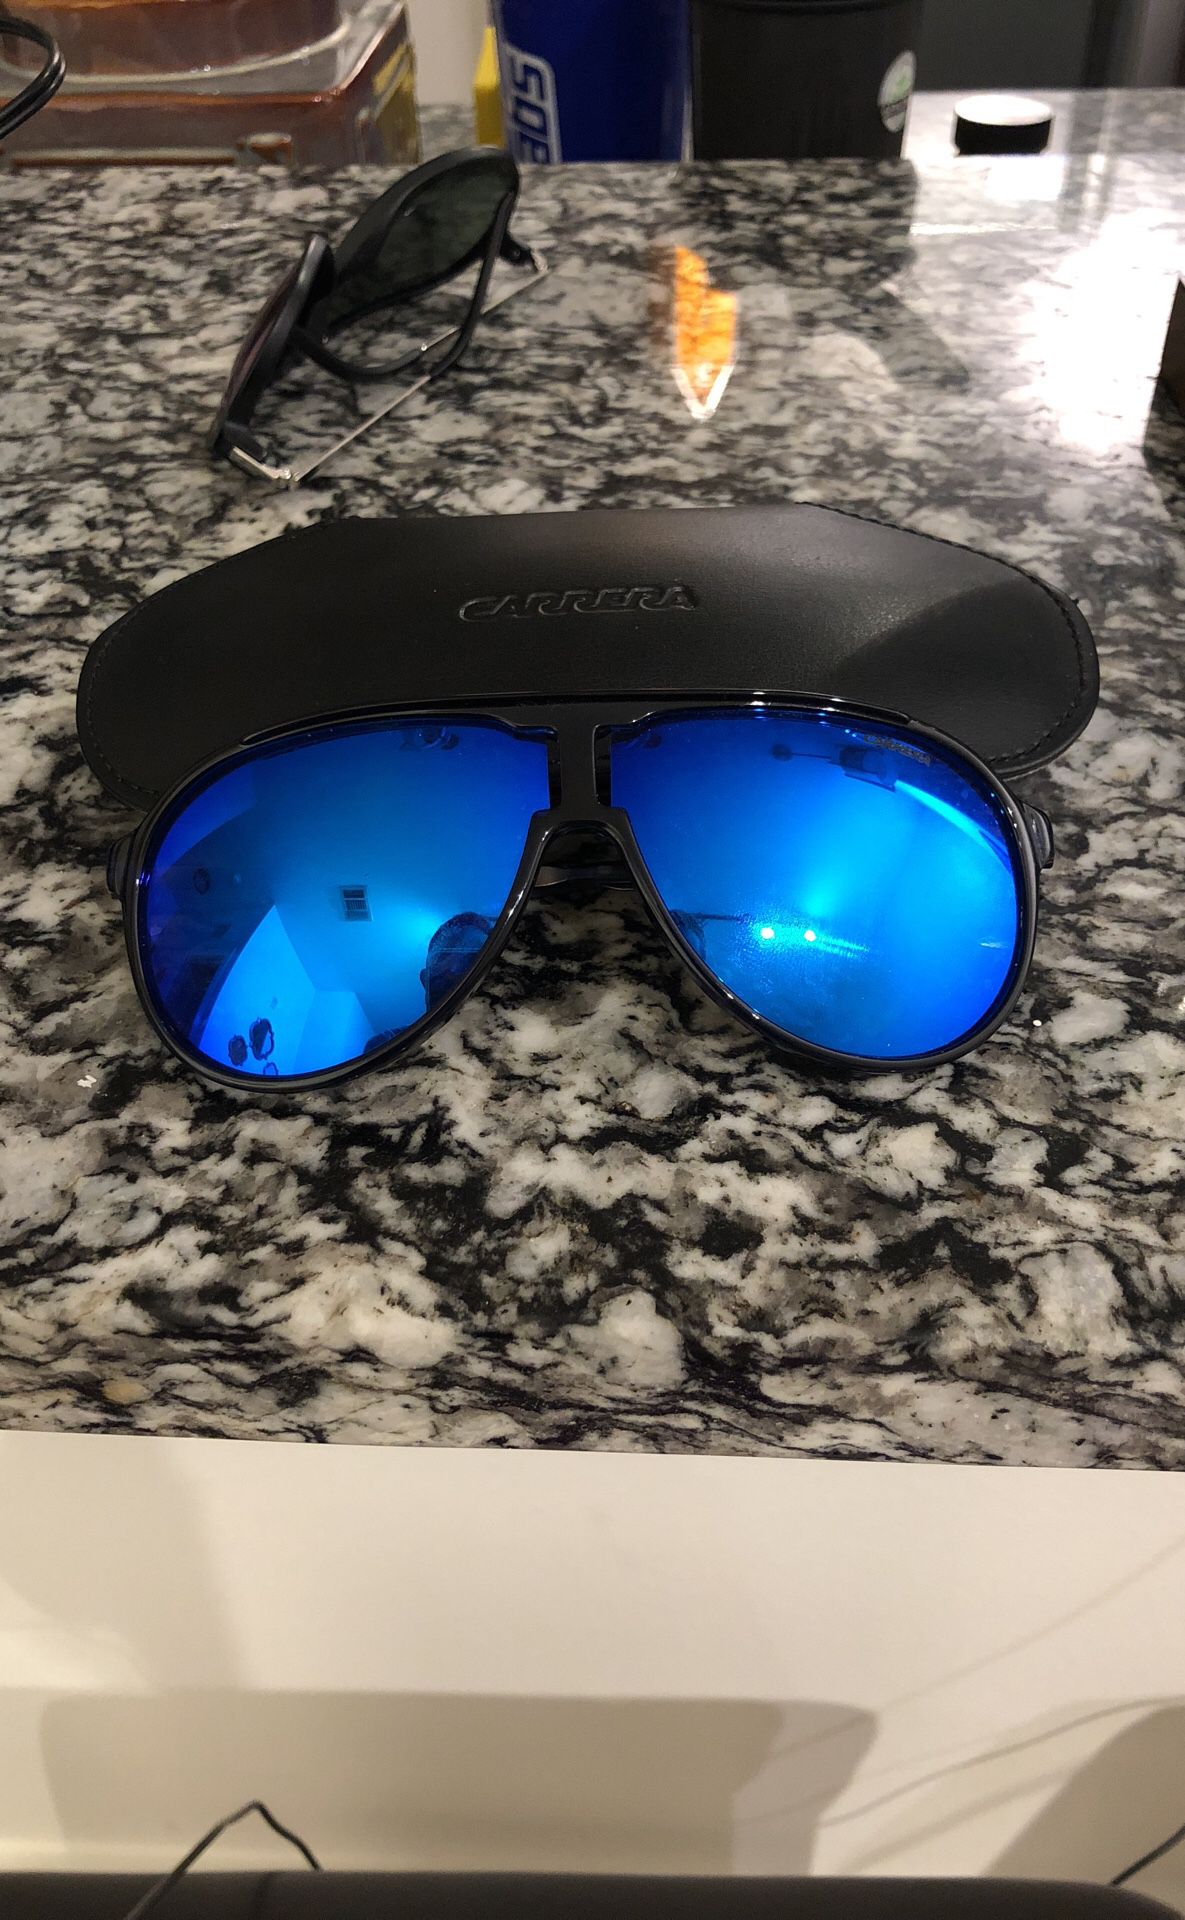 Blue Carrera sunglasses